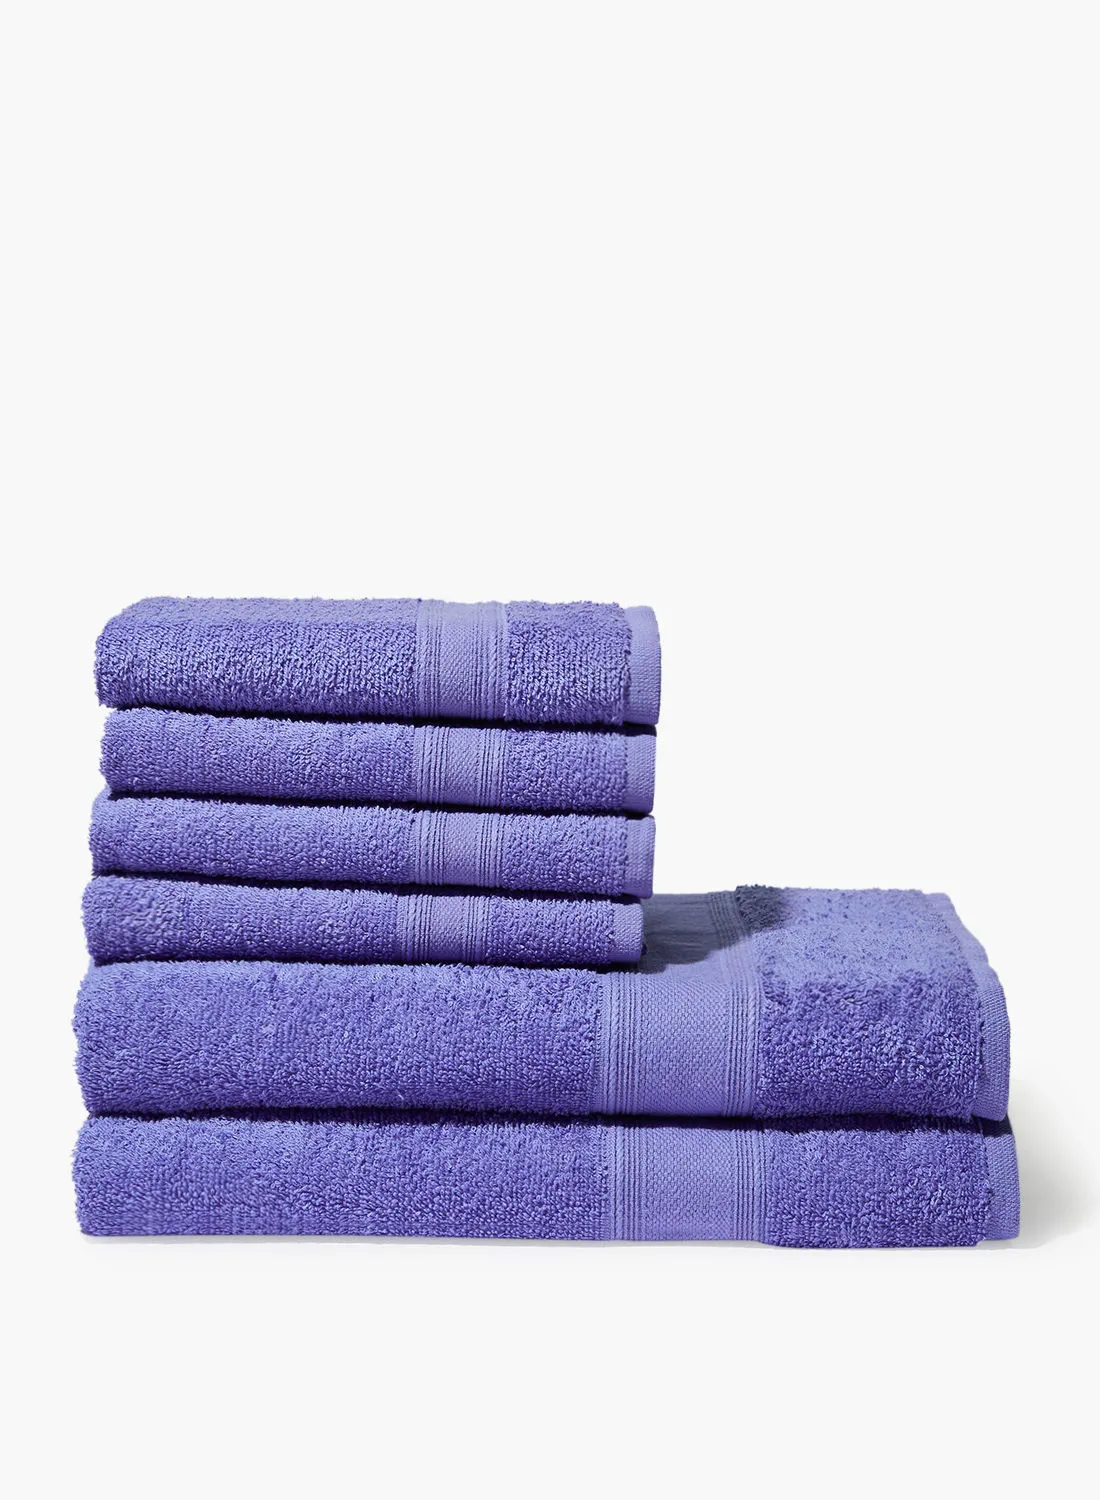 Amal 6 Piece Bathroom Towel Set - 400 GSM 100% Cotton Terry - 4 Hand Towel - 2 Bath Towel - Periwinkle Color -Quick Dry - Super Absorbent